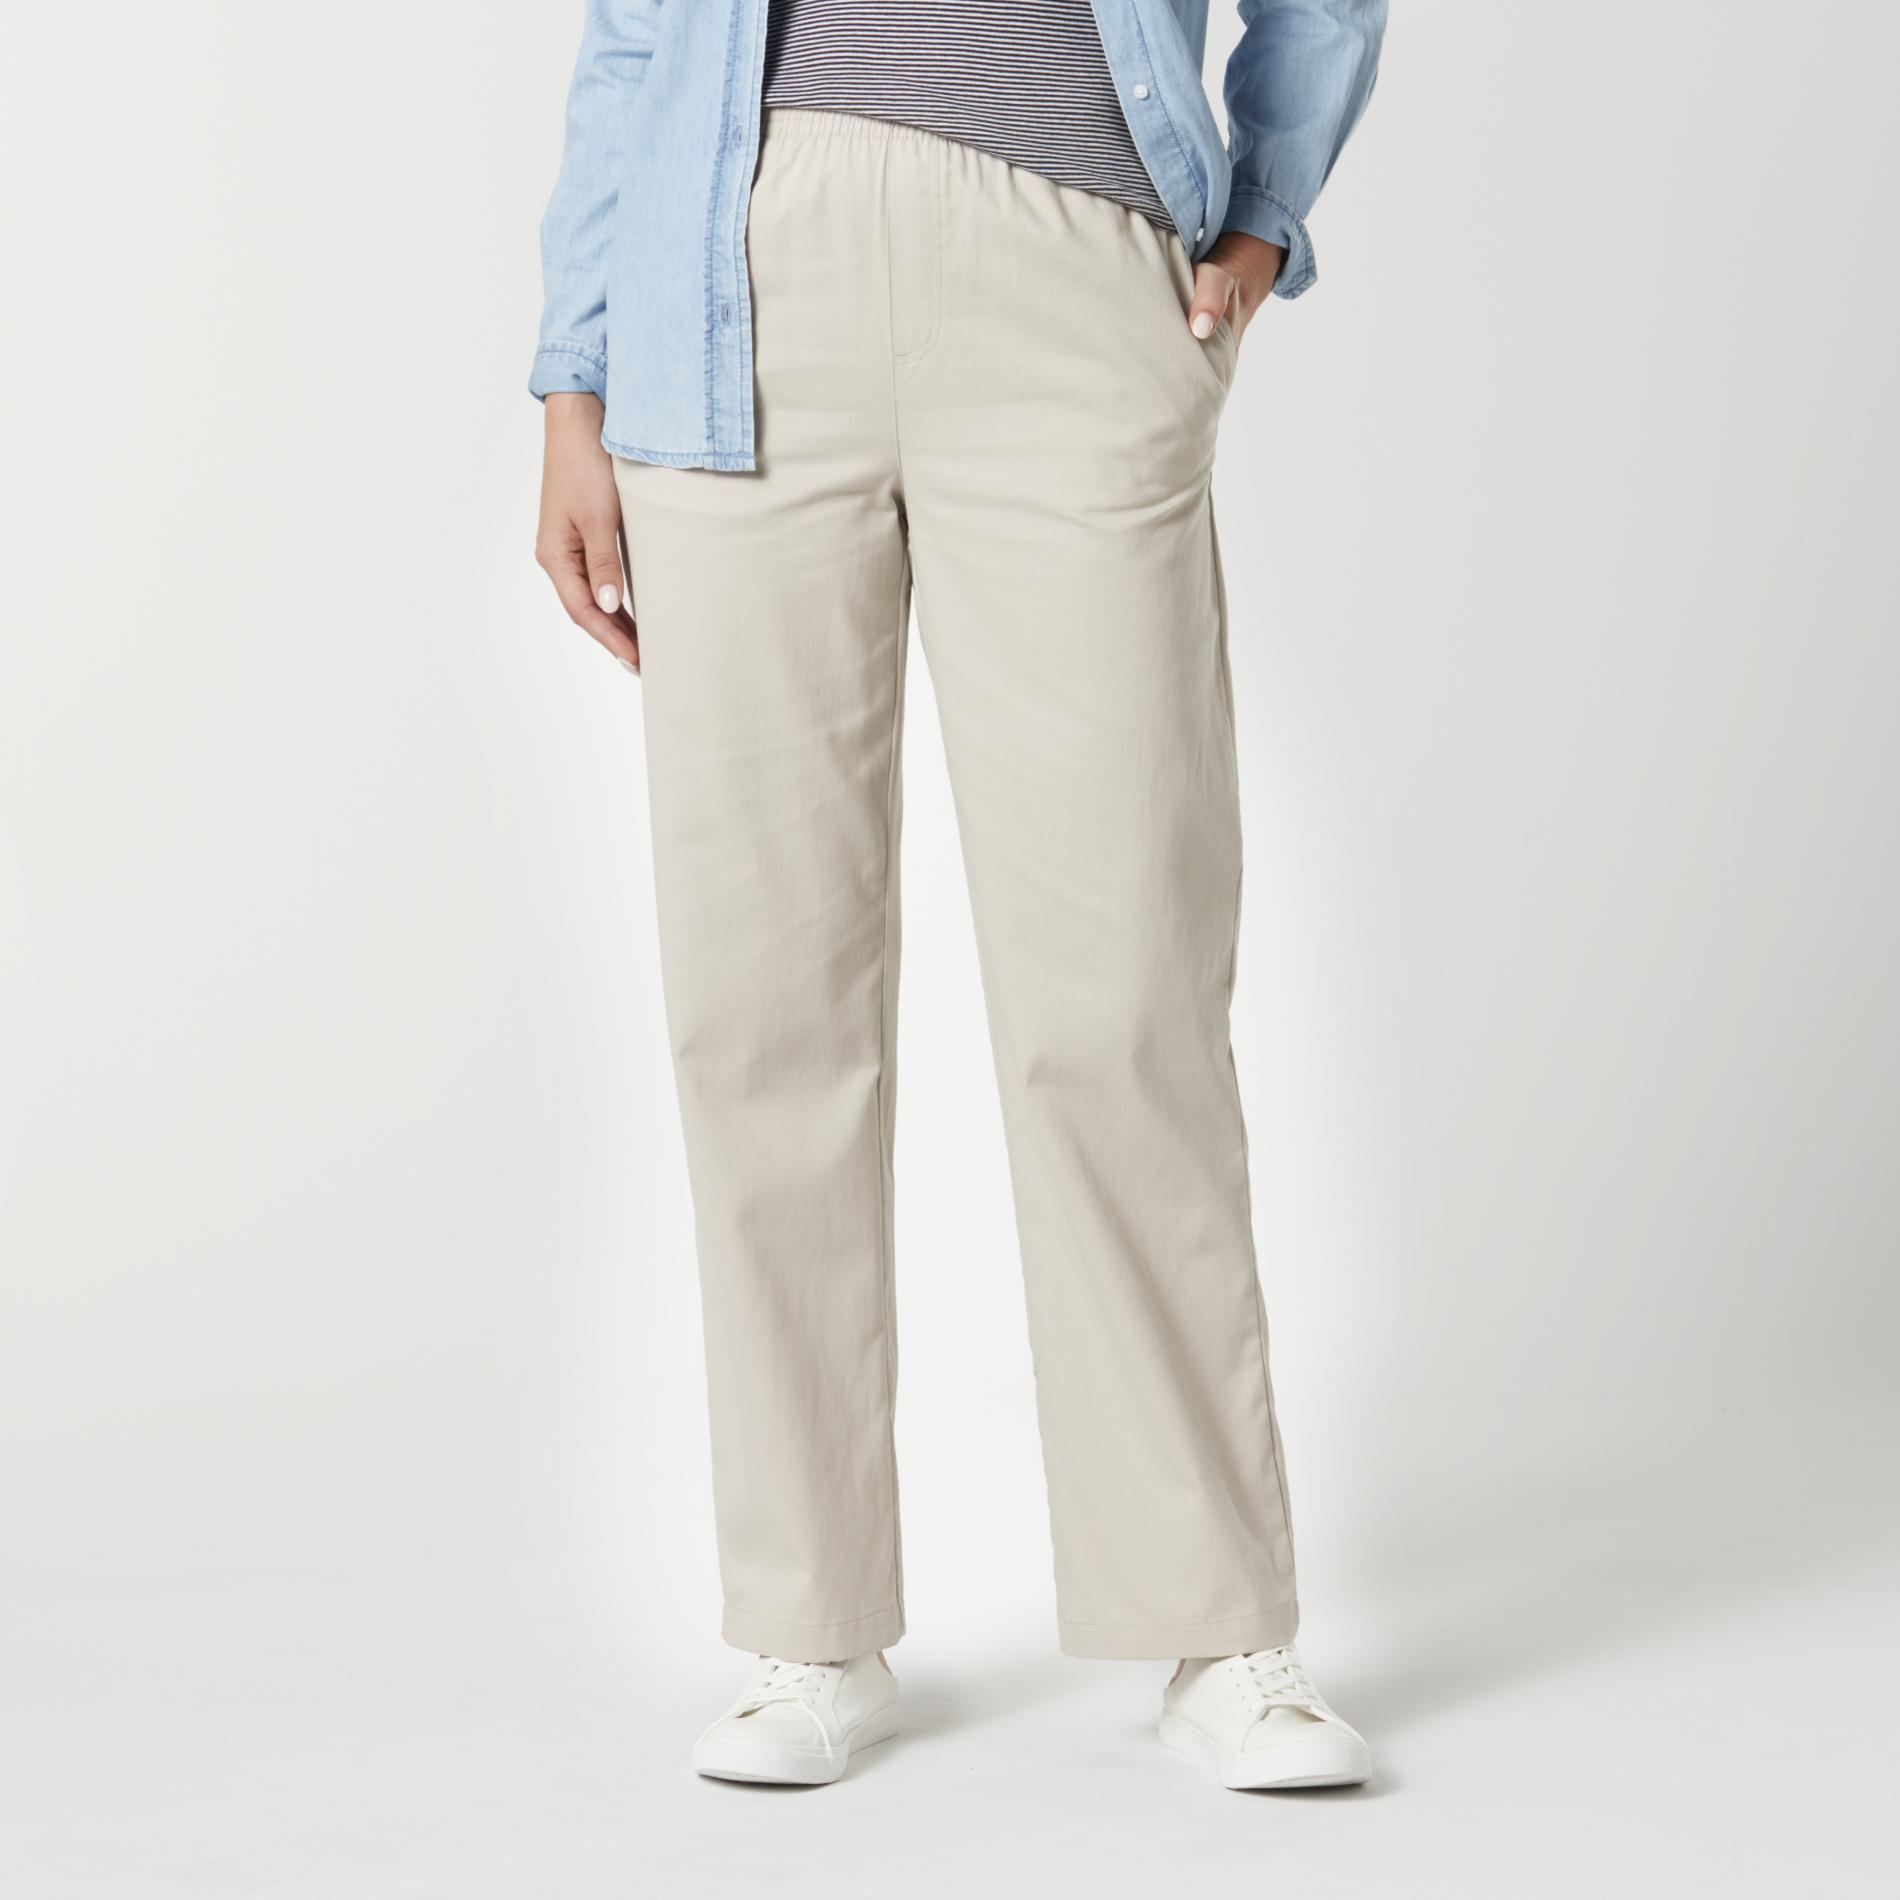 laura scott elastic waist jeans